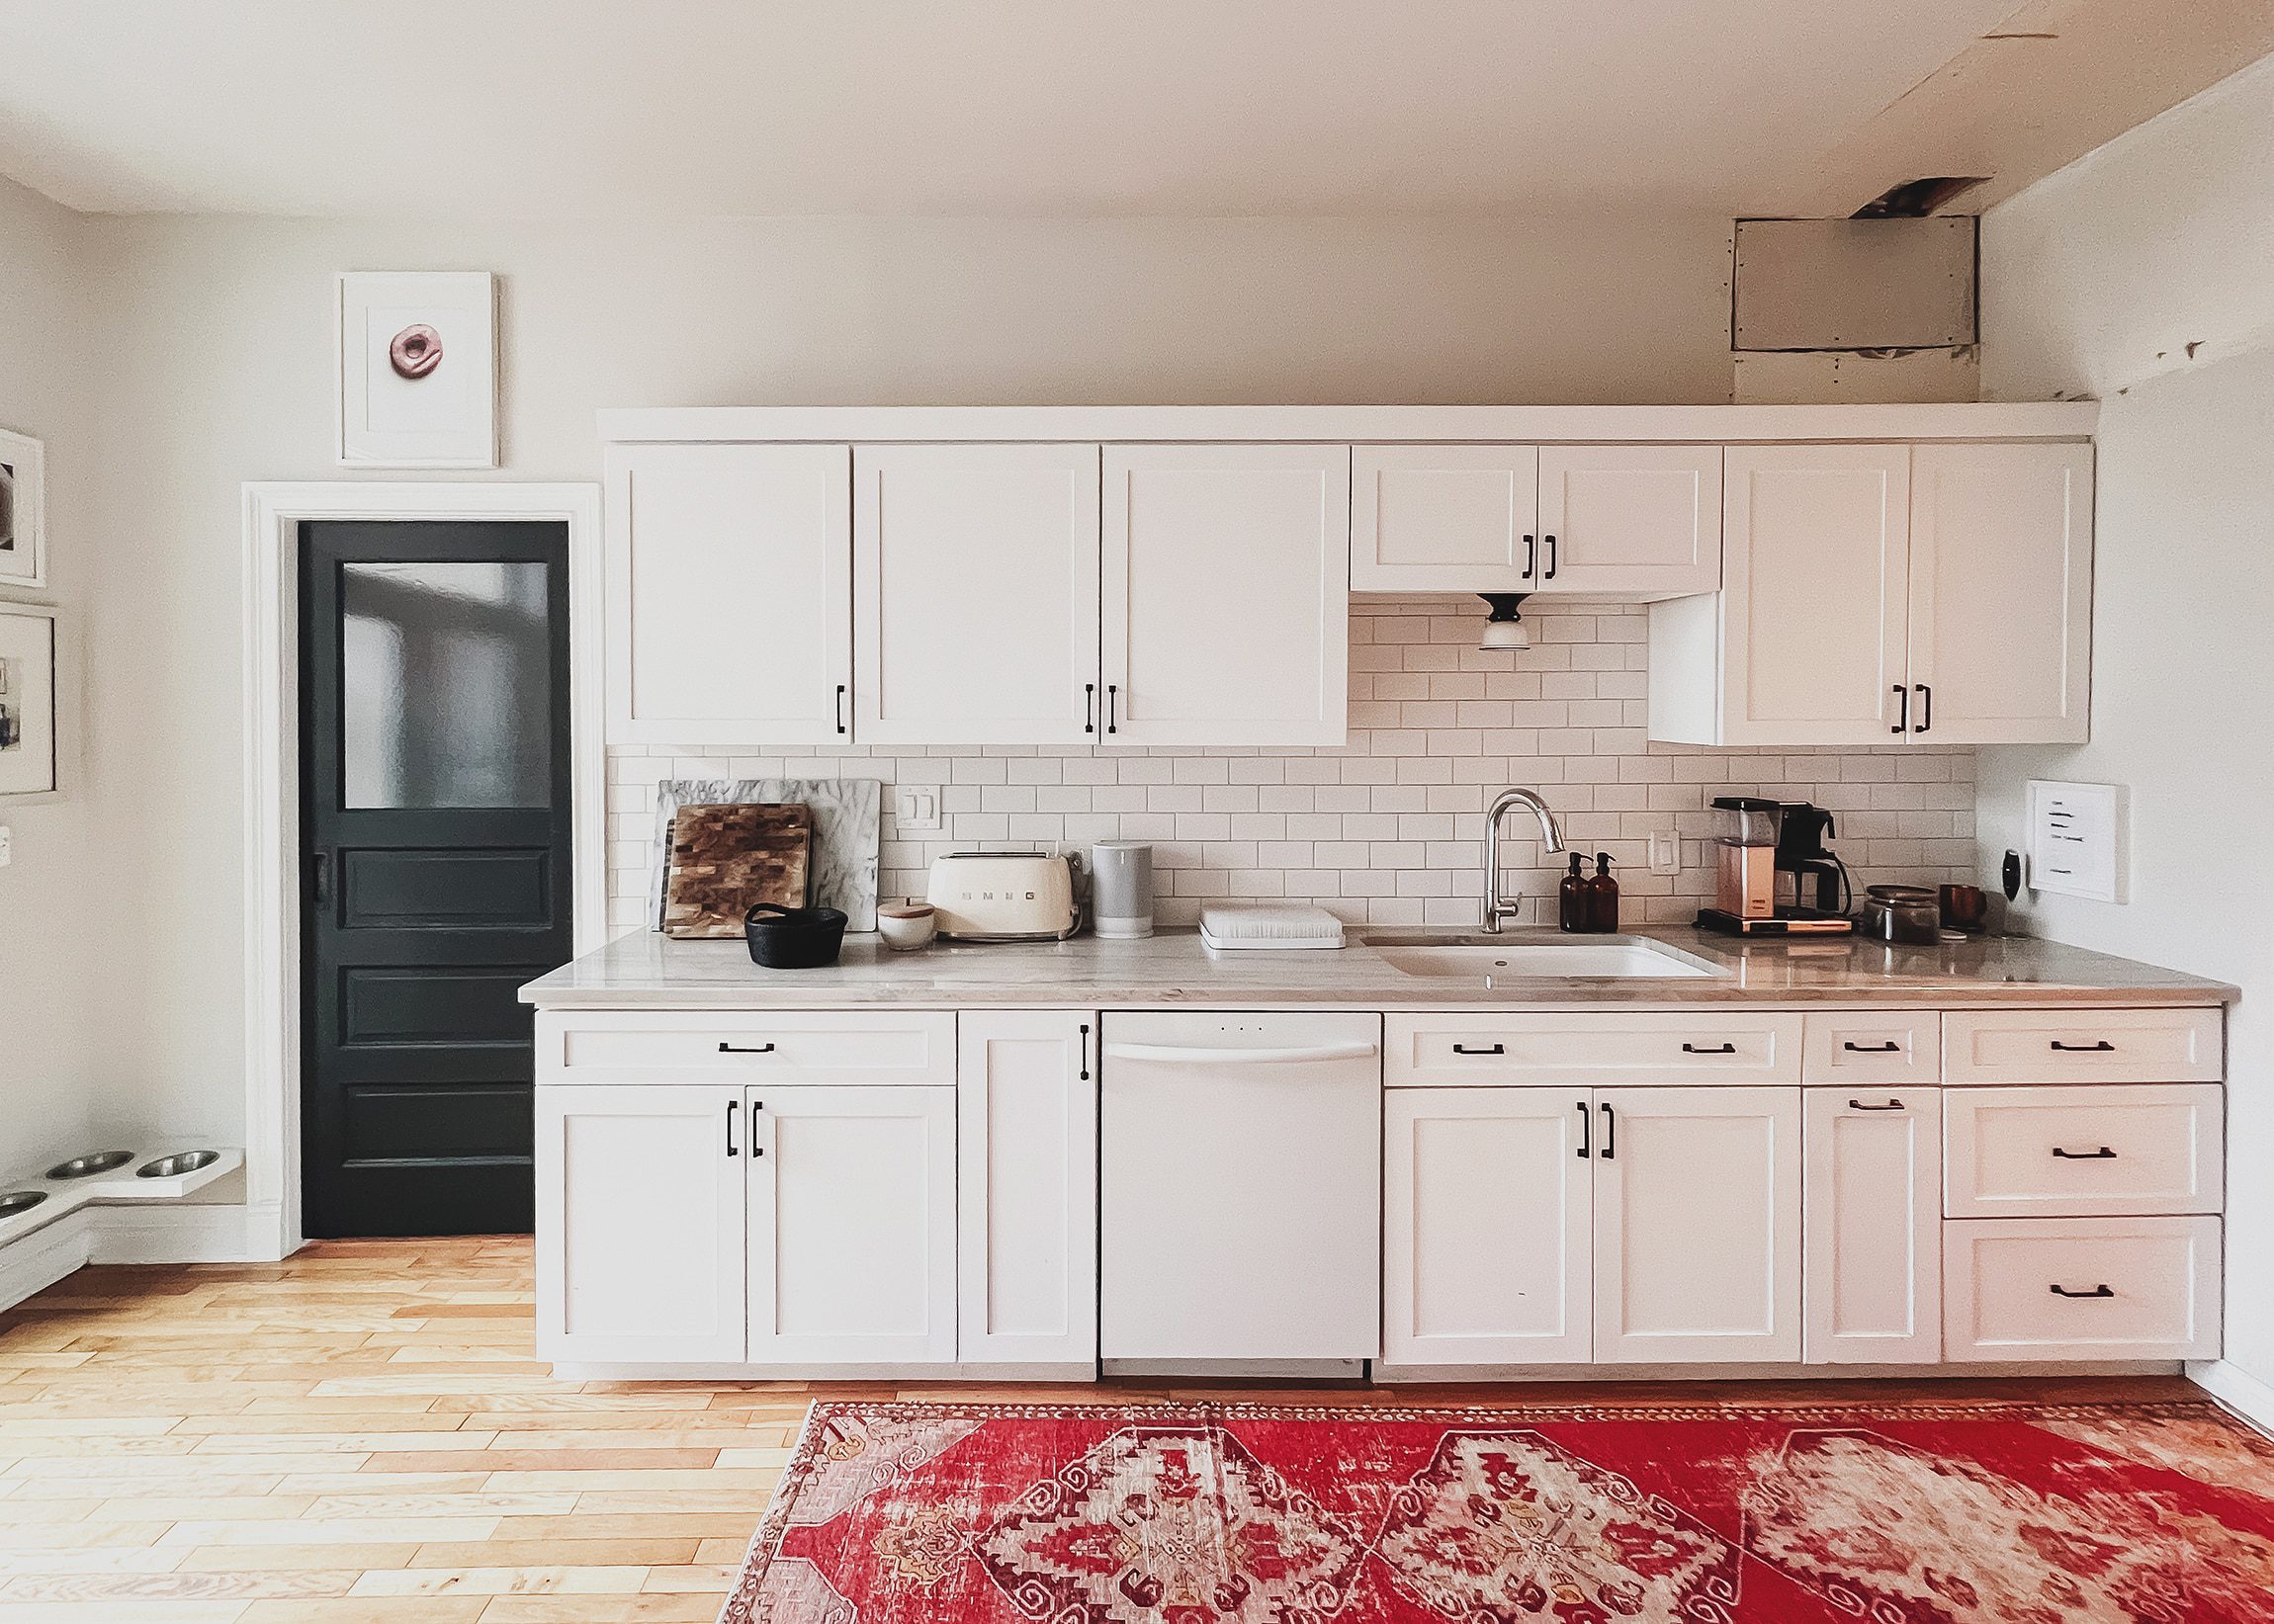 Our version 1 kitchen renovation // via Yellow Brick Home